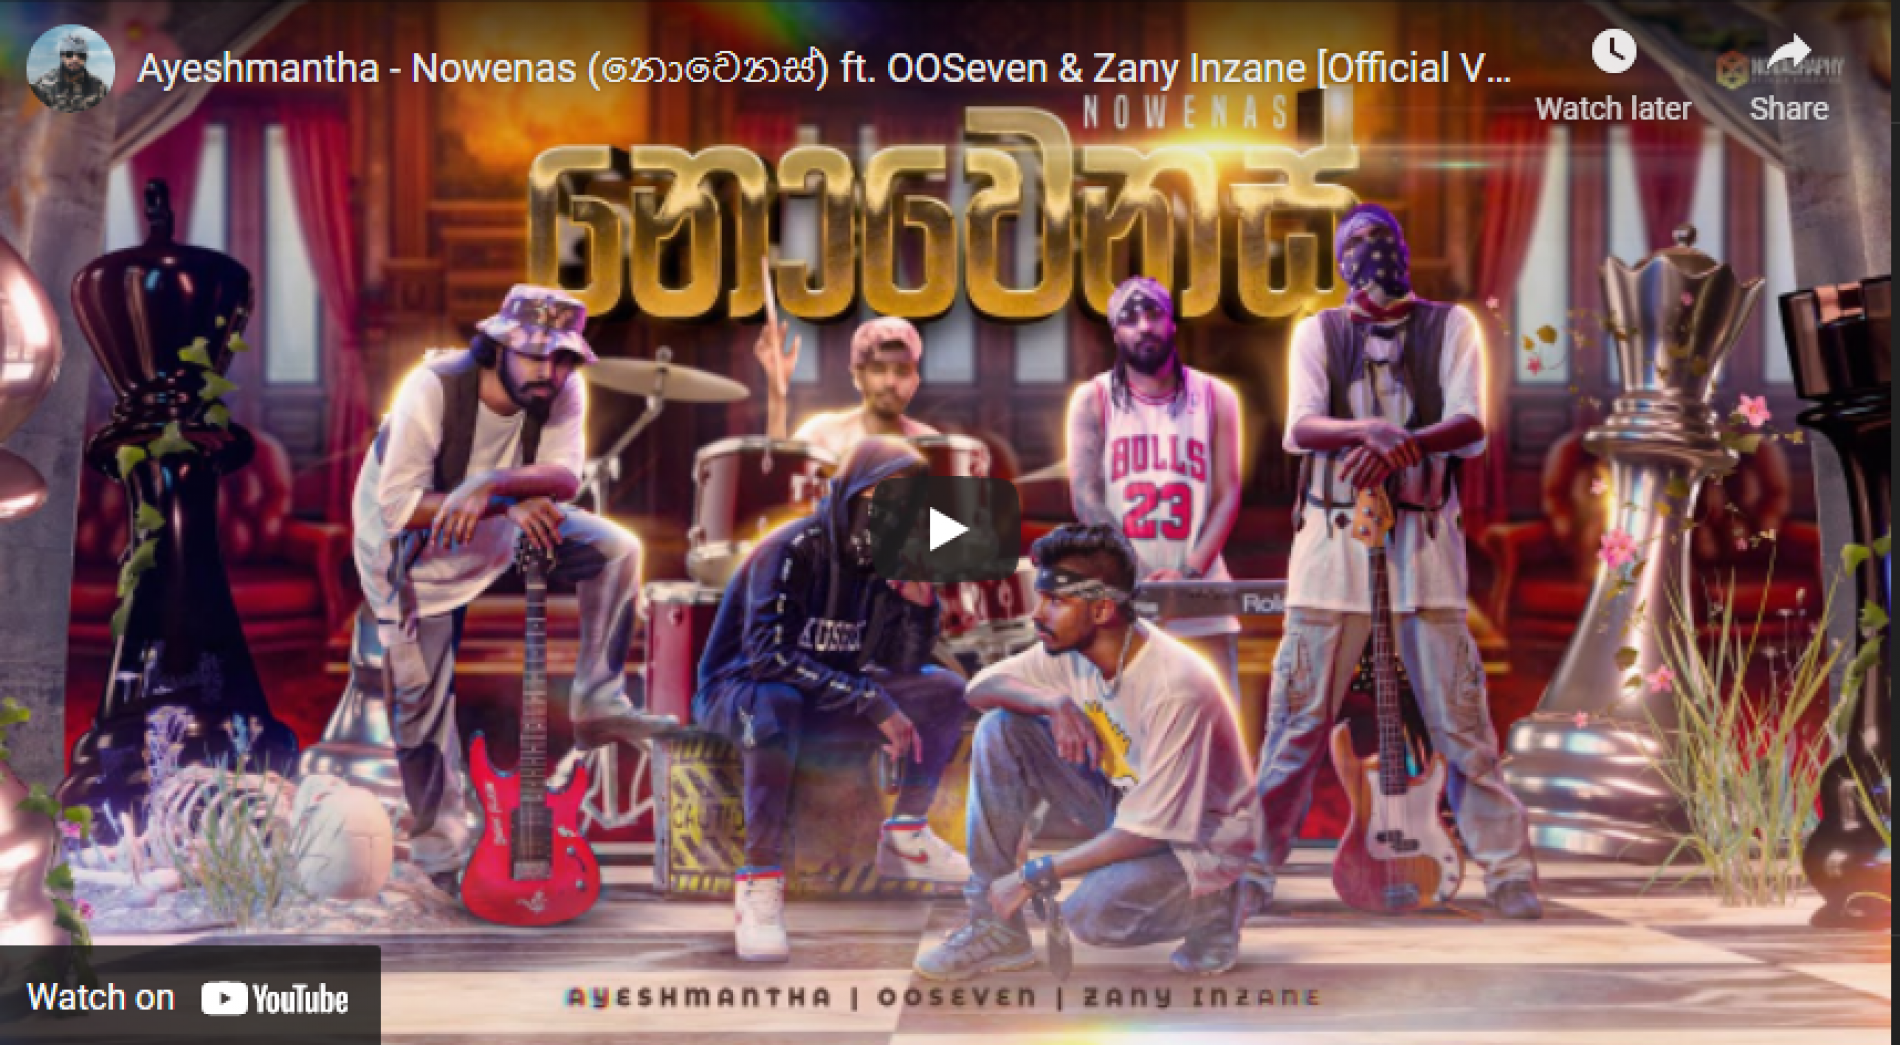 New Music : Ayeshmantha – Nowenas (නොවෙනස්) ft. OOSeven & Zany Inzane [Official Video]